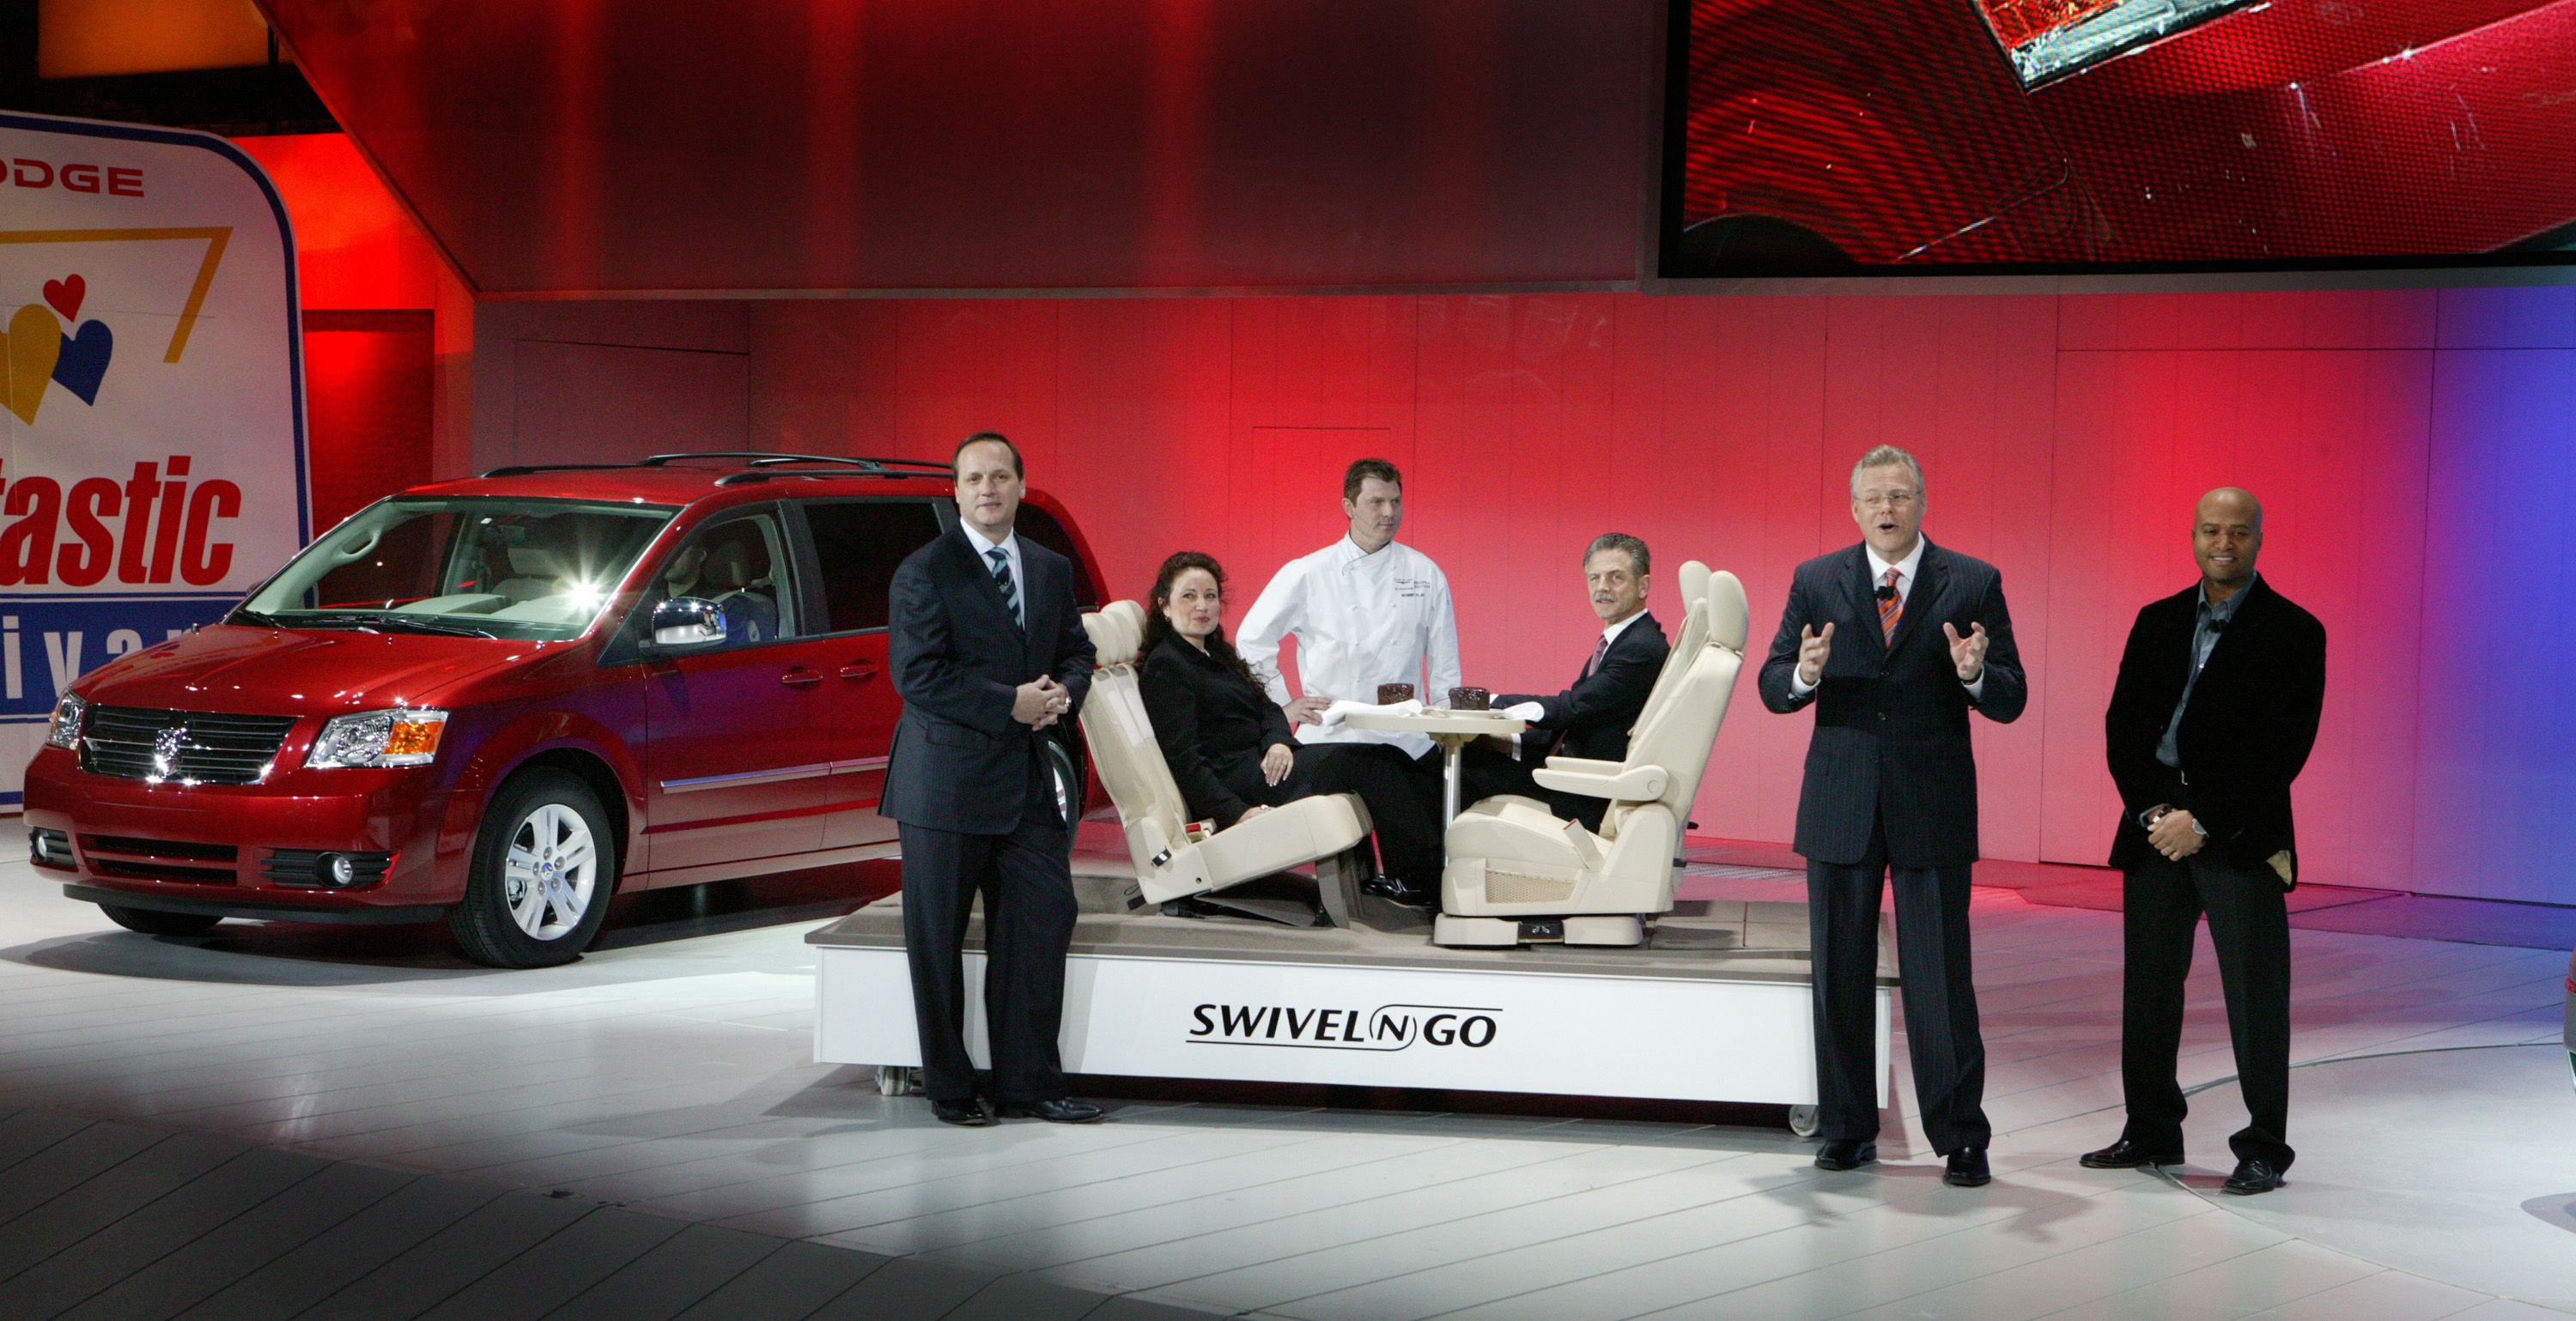 2008 Dodge Grand Caravan